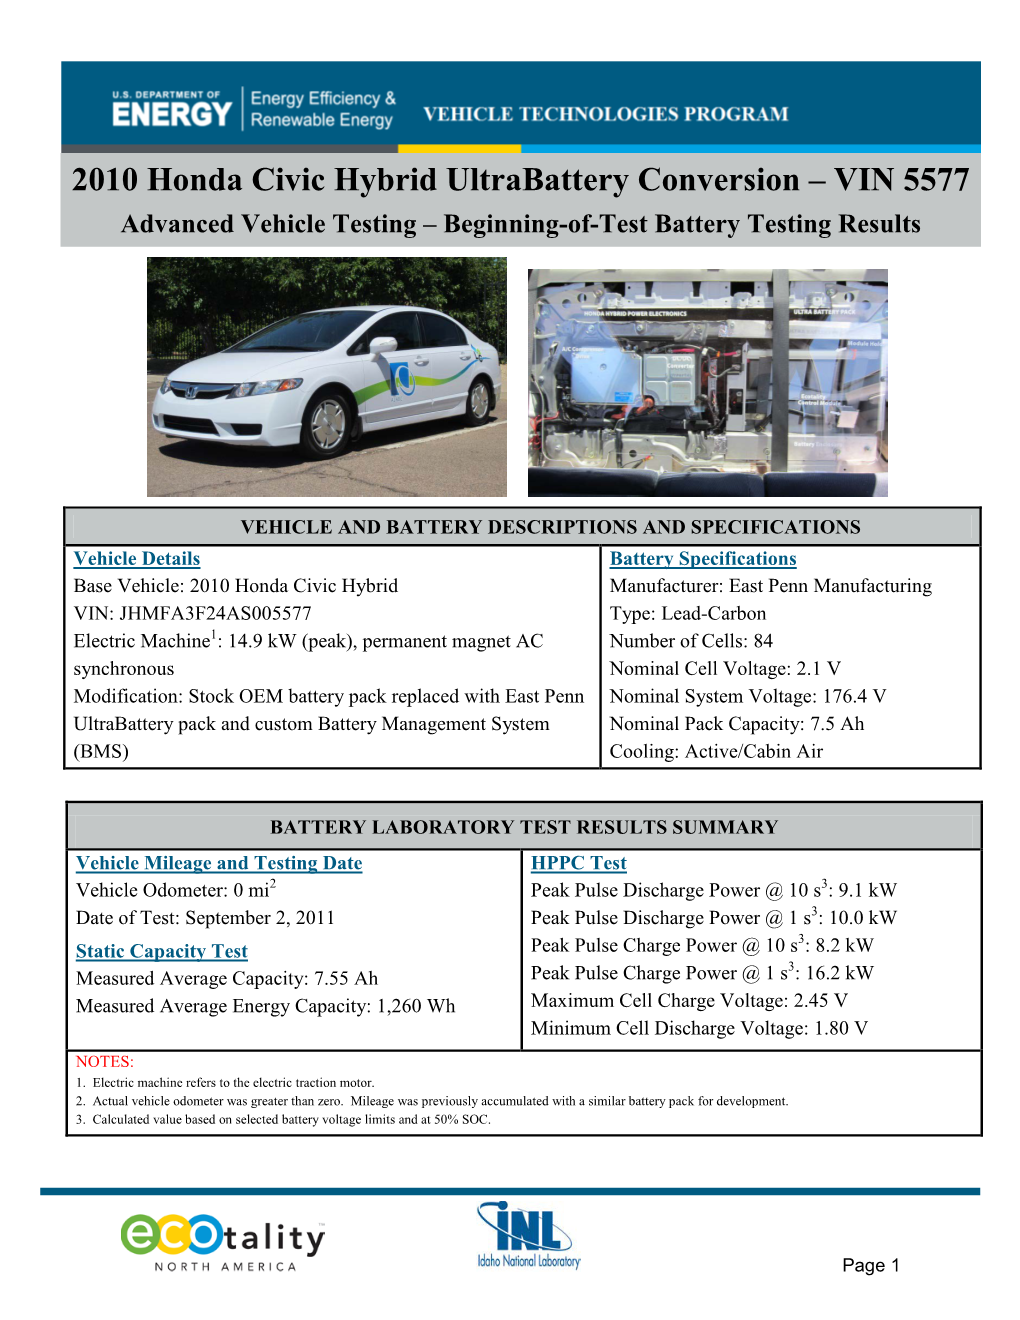 2010 Honda Civic Hybrid Ultrabattery Conversion – VIN 5577